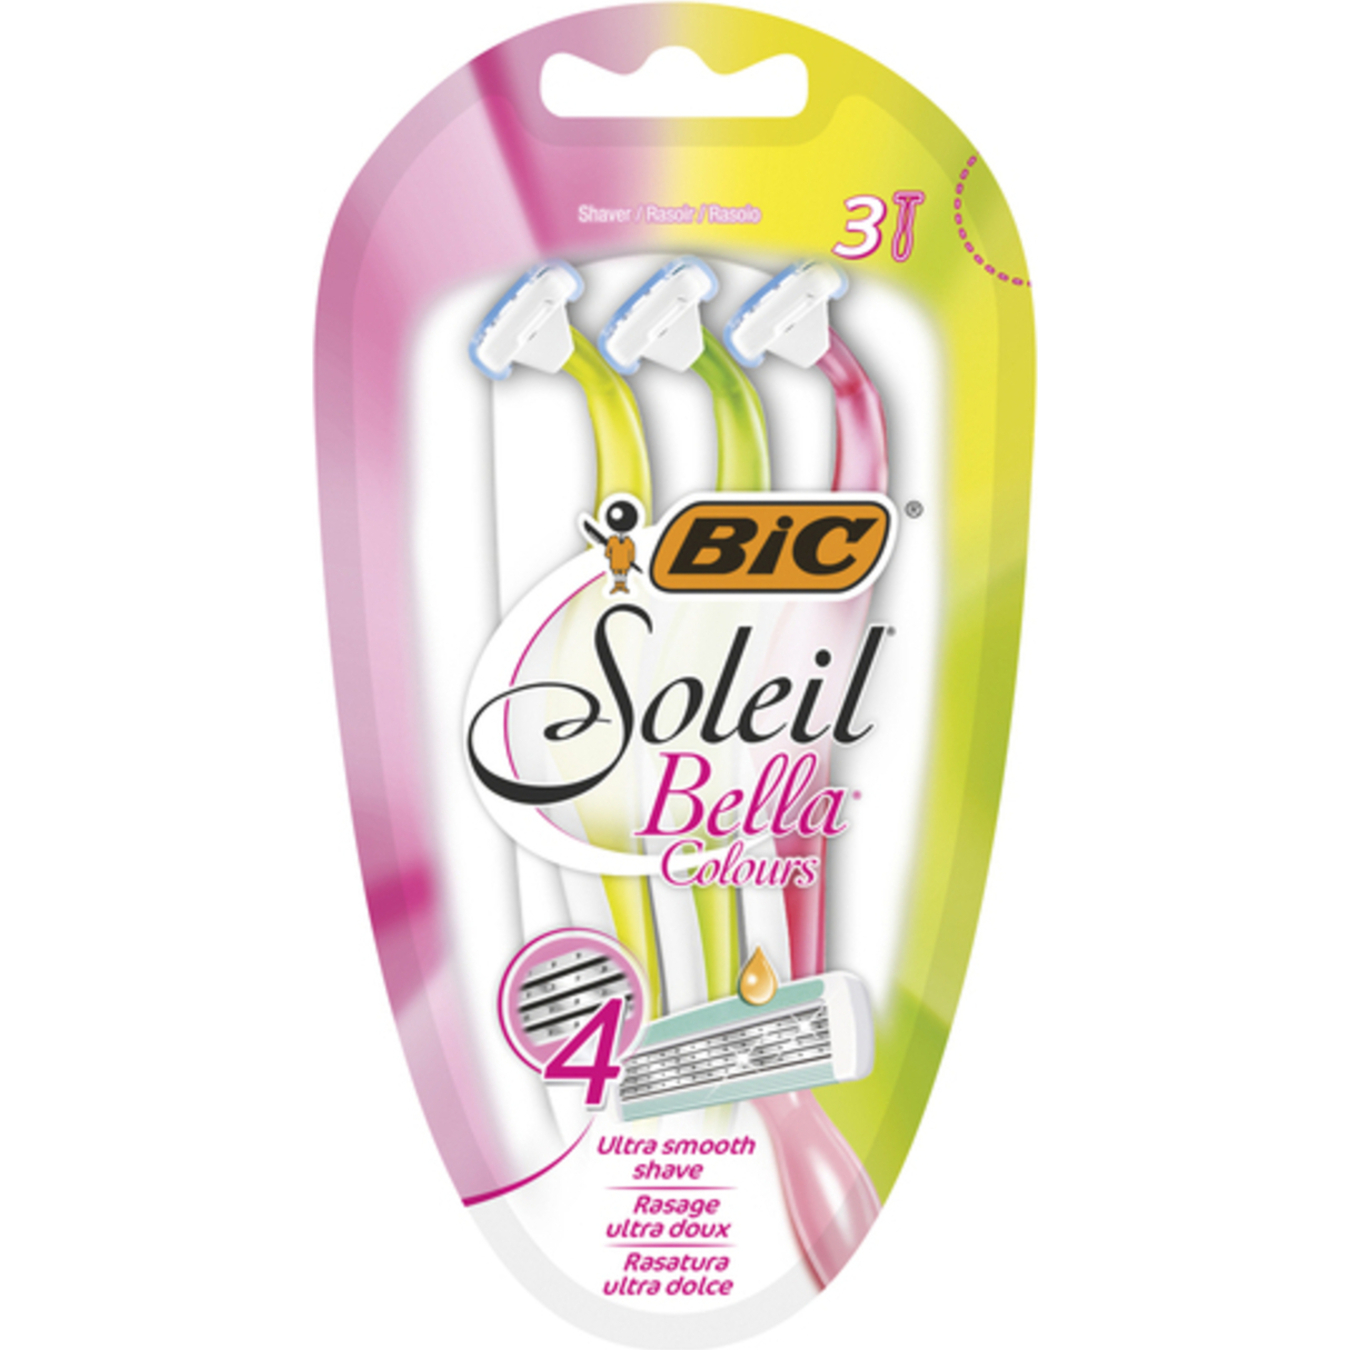 BIC Soleil Bella Colours Lady razor 3pcs